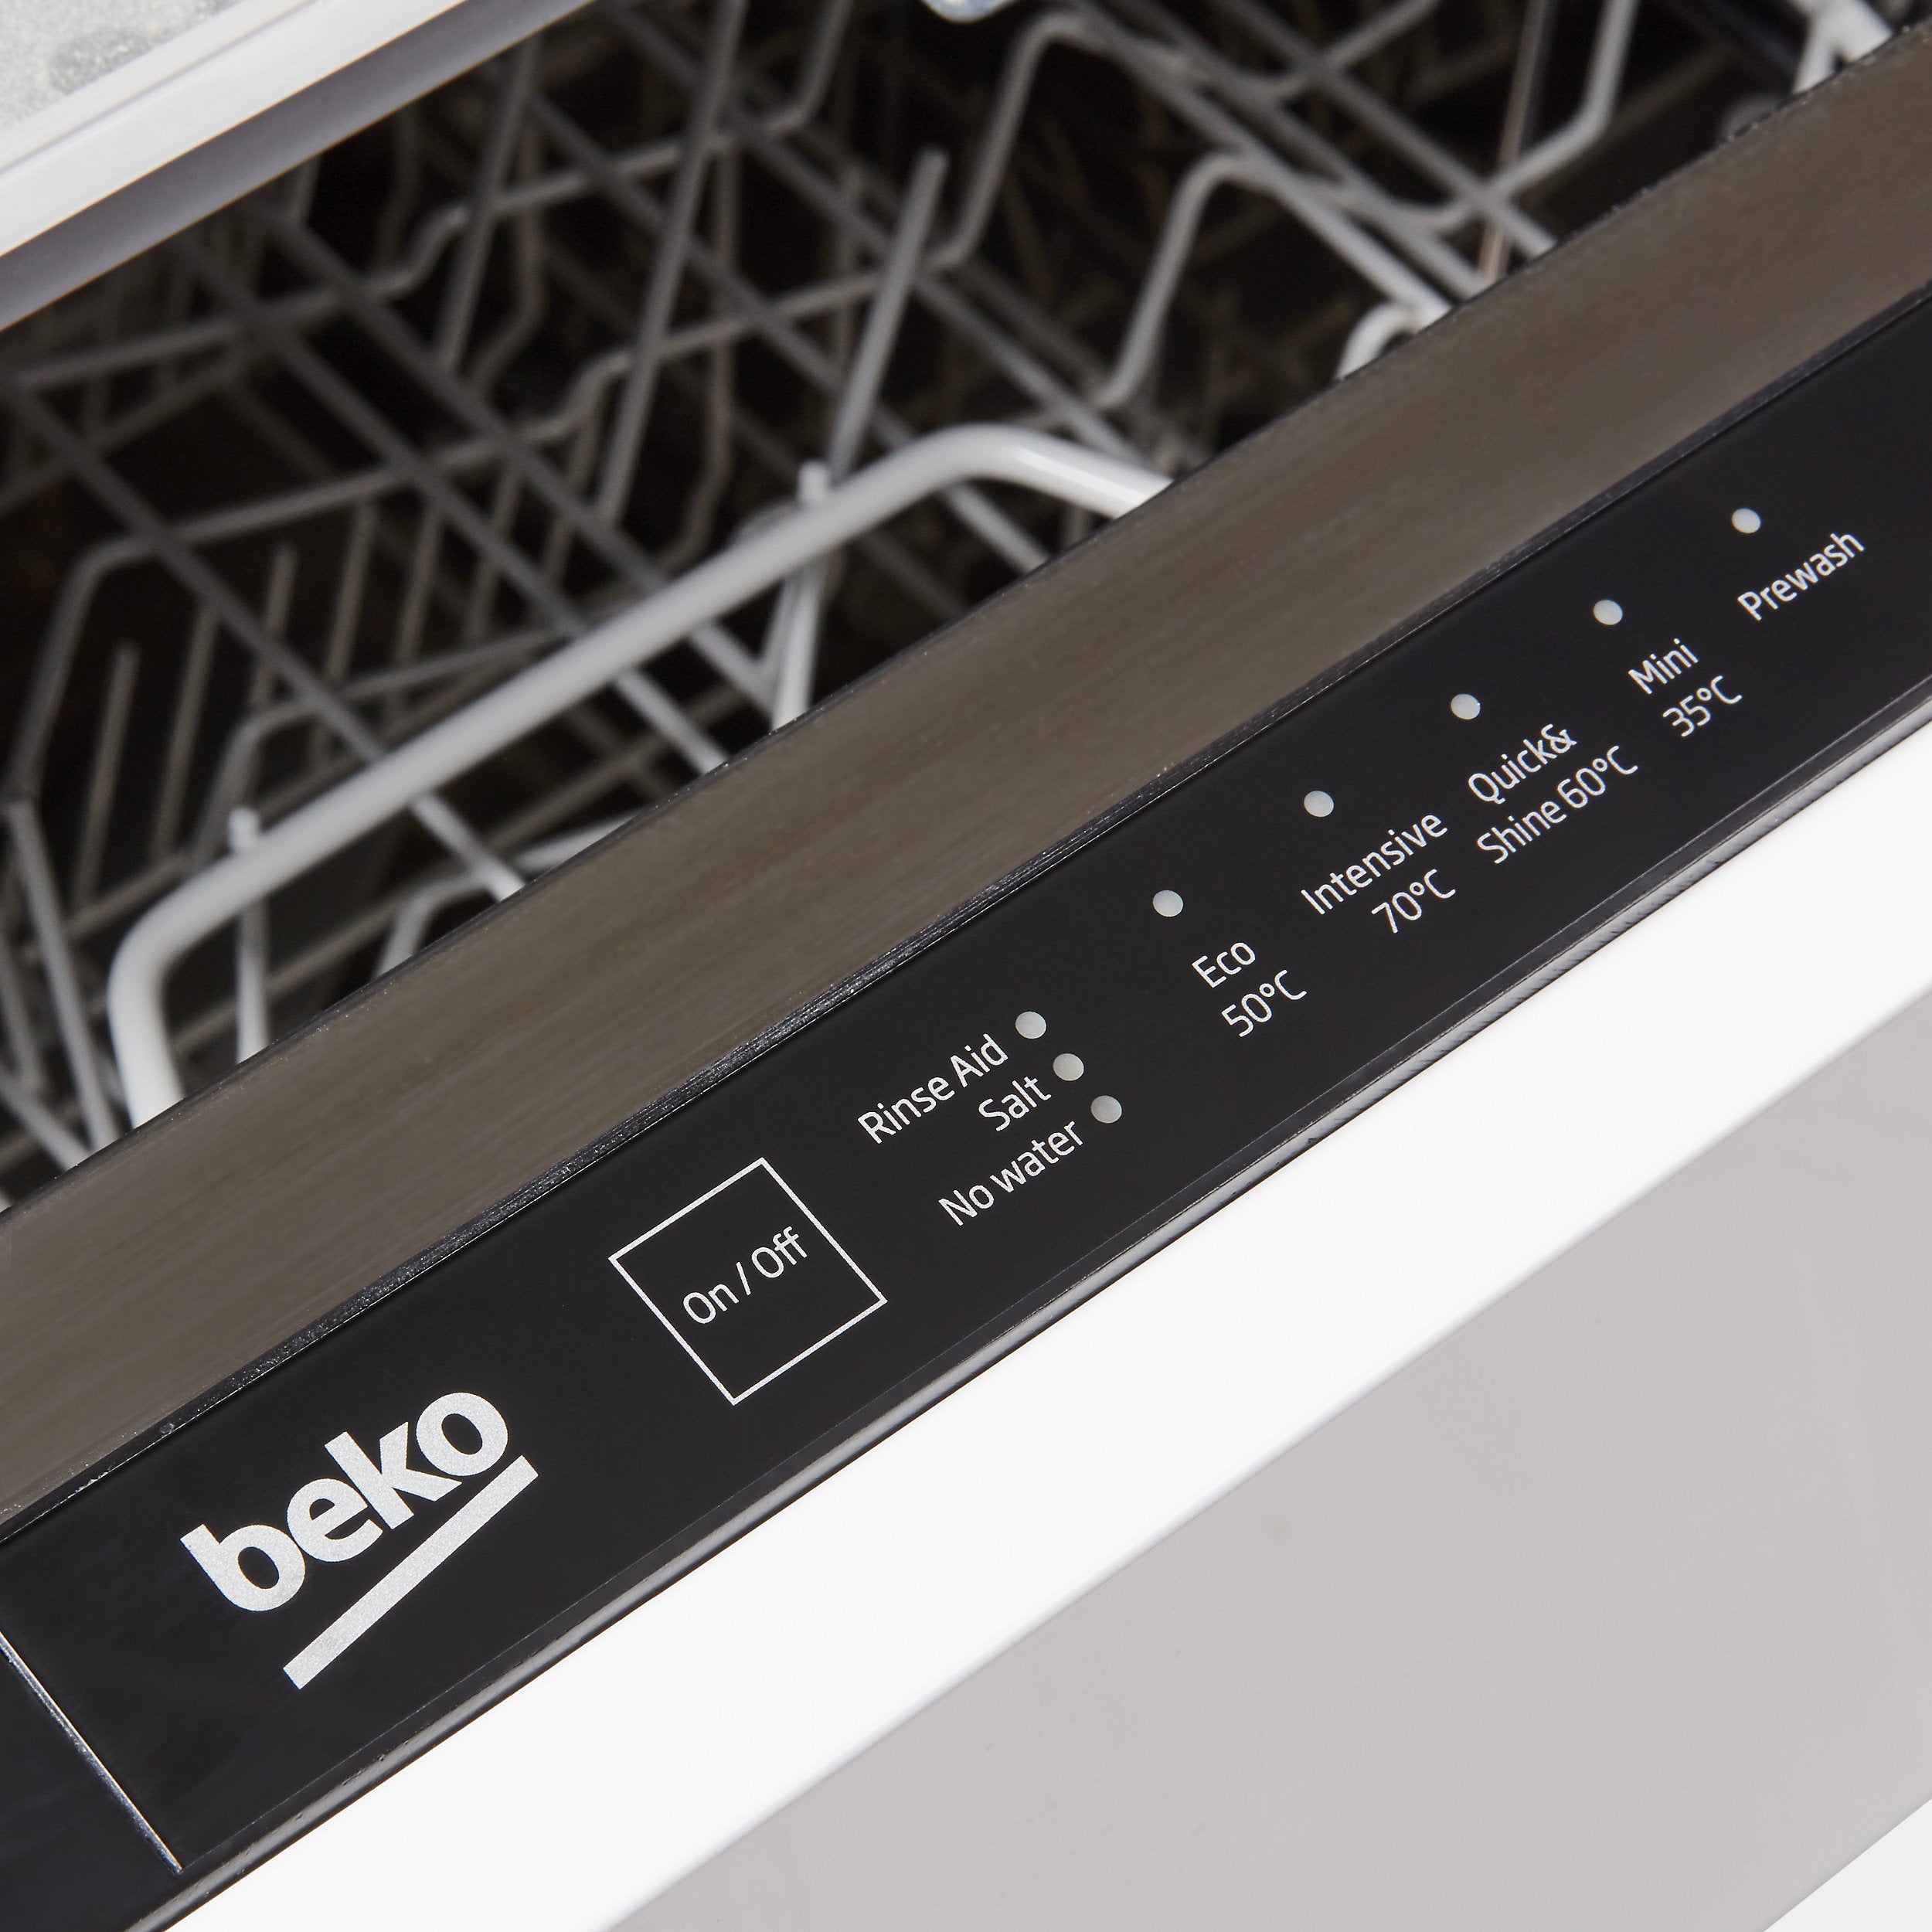 Beko-Integrated Dishwasher-Black & white DIN15Q10-1520